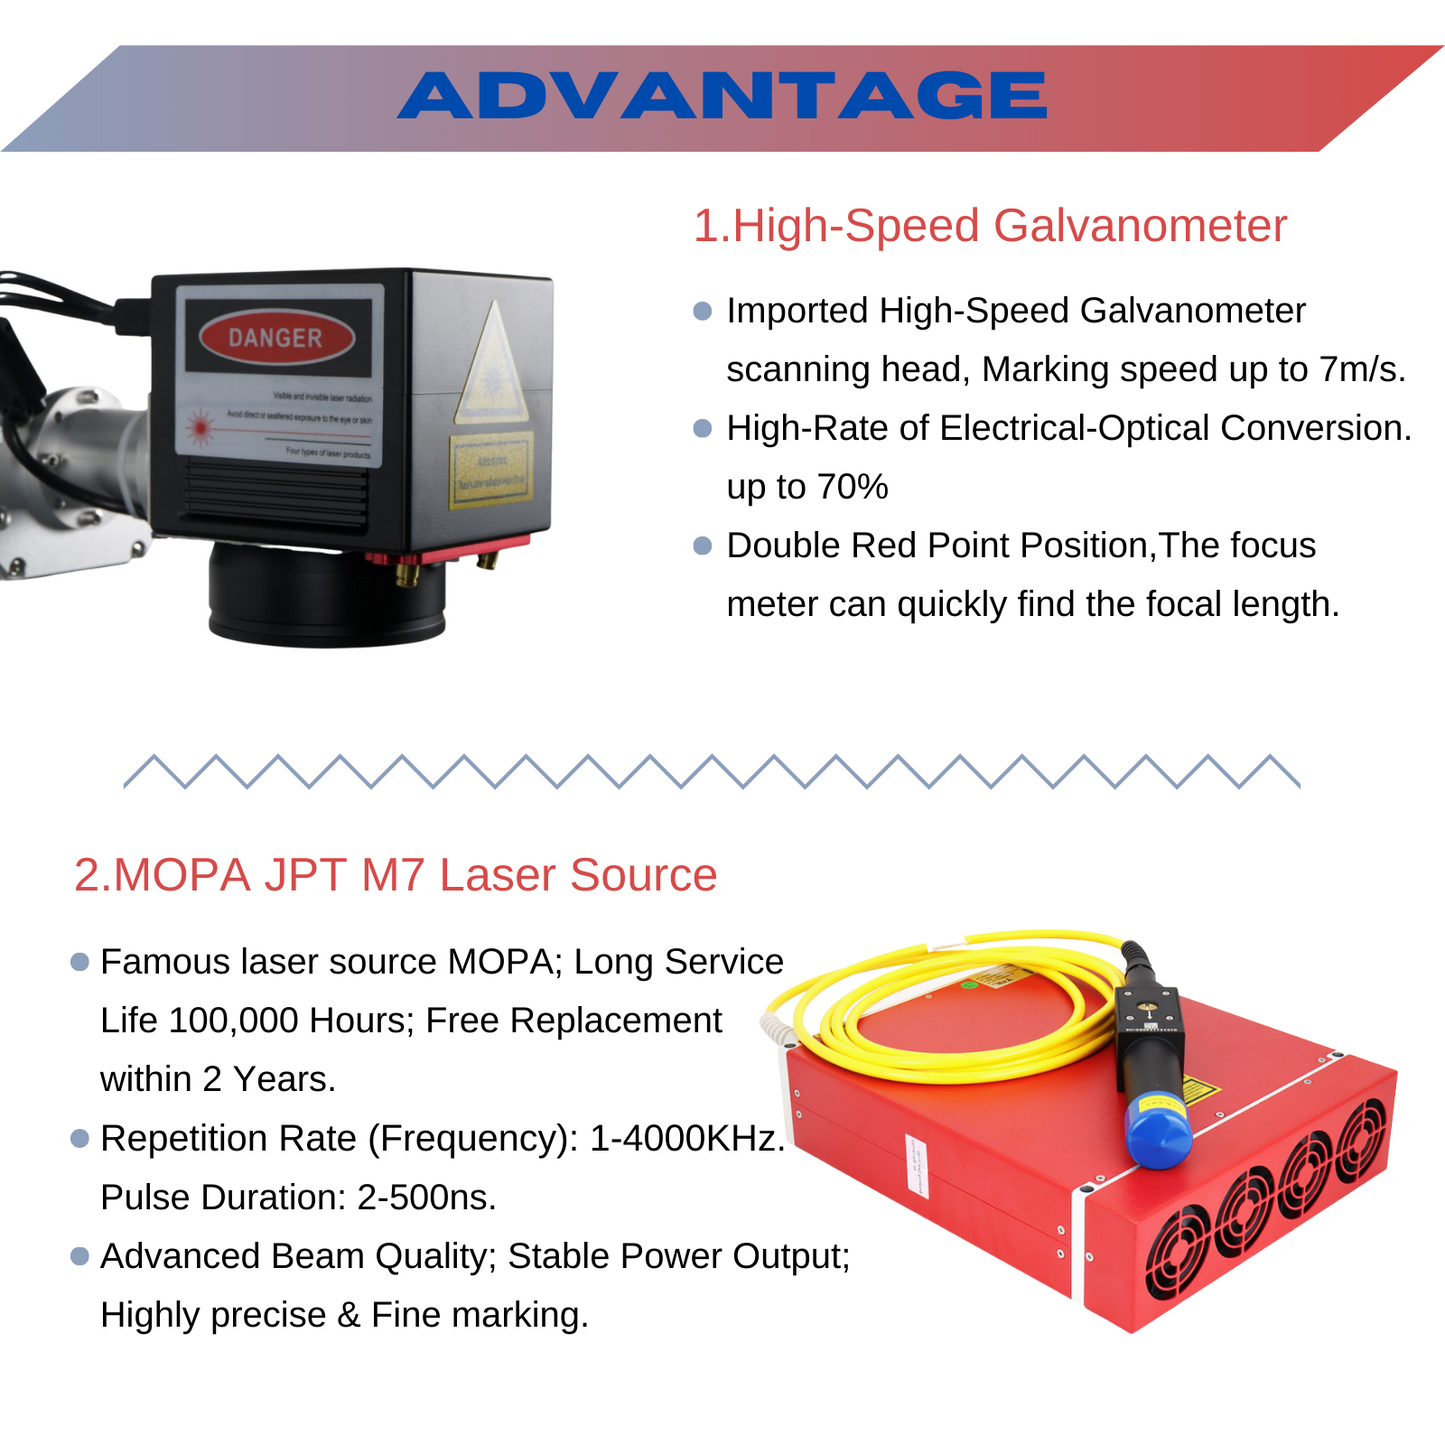 30W MOPA JPT M7 Fiber Laser Engraver